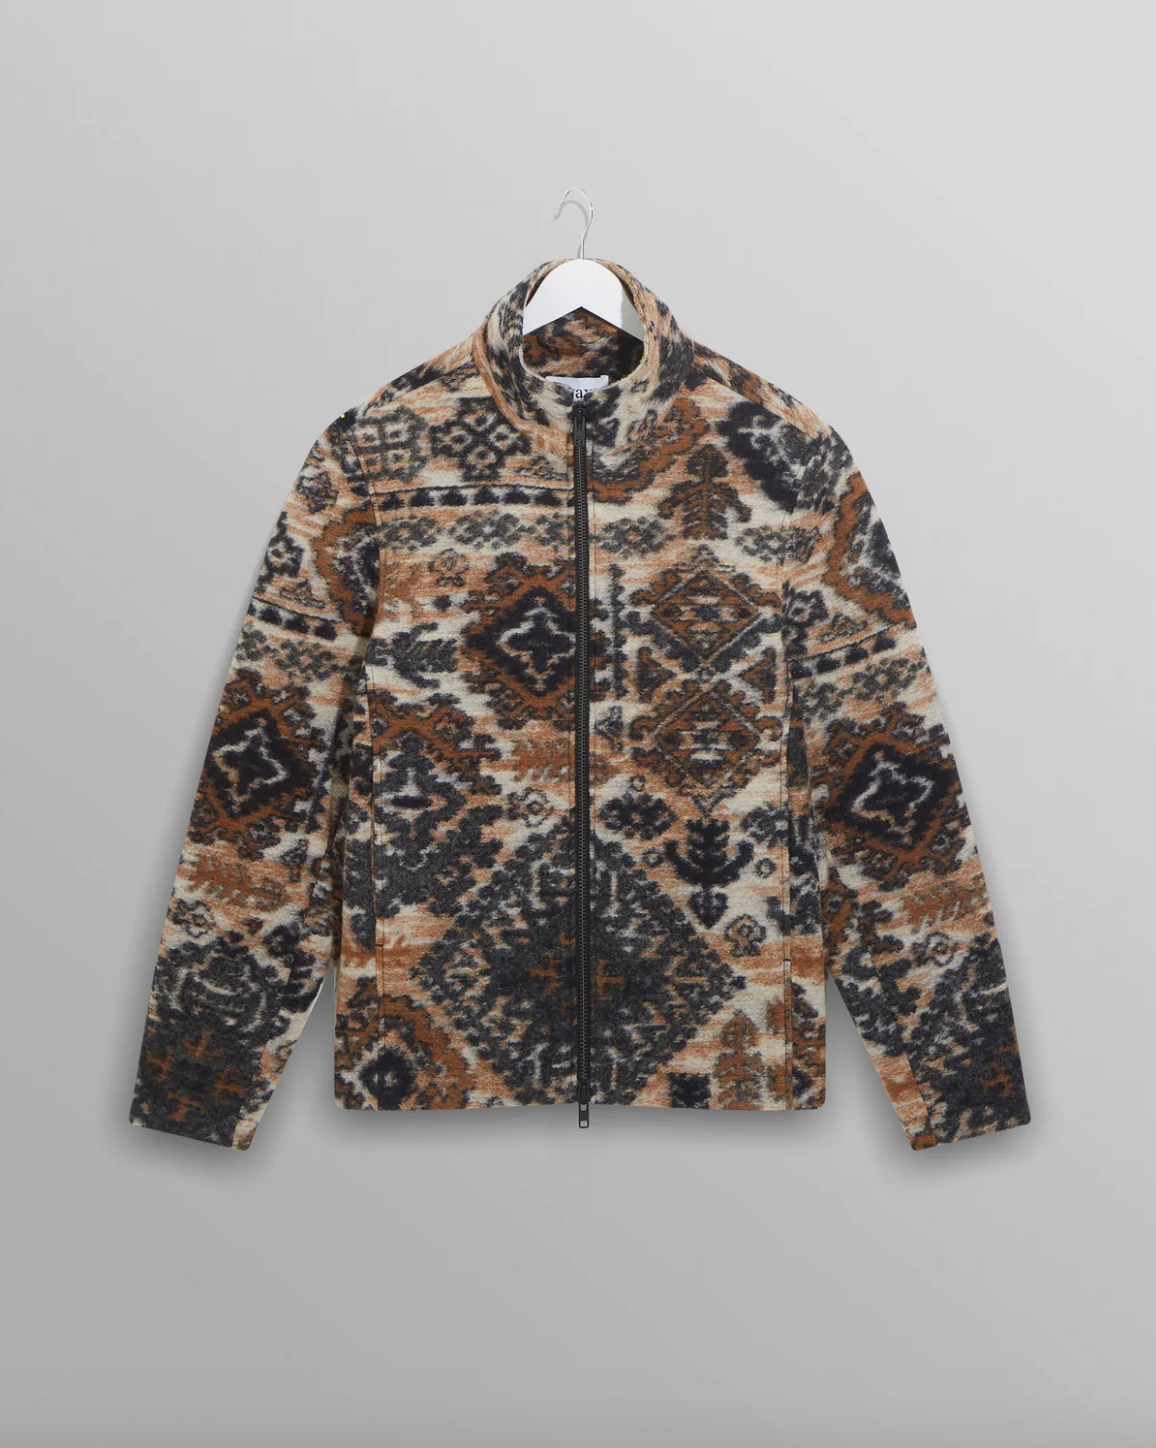 Wax London Cozi Jacket Ornate Fleece